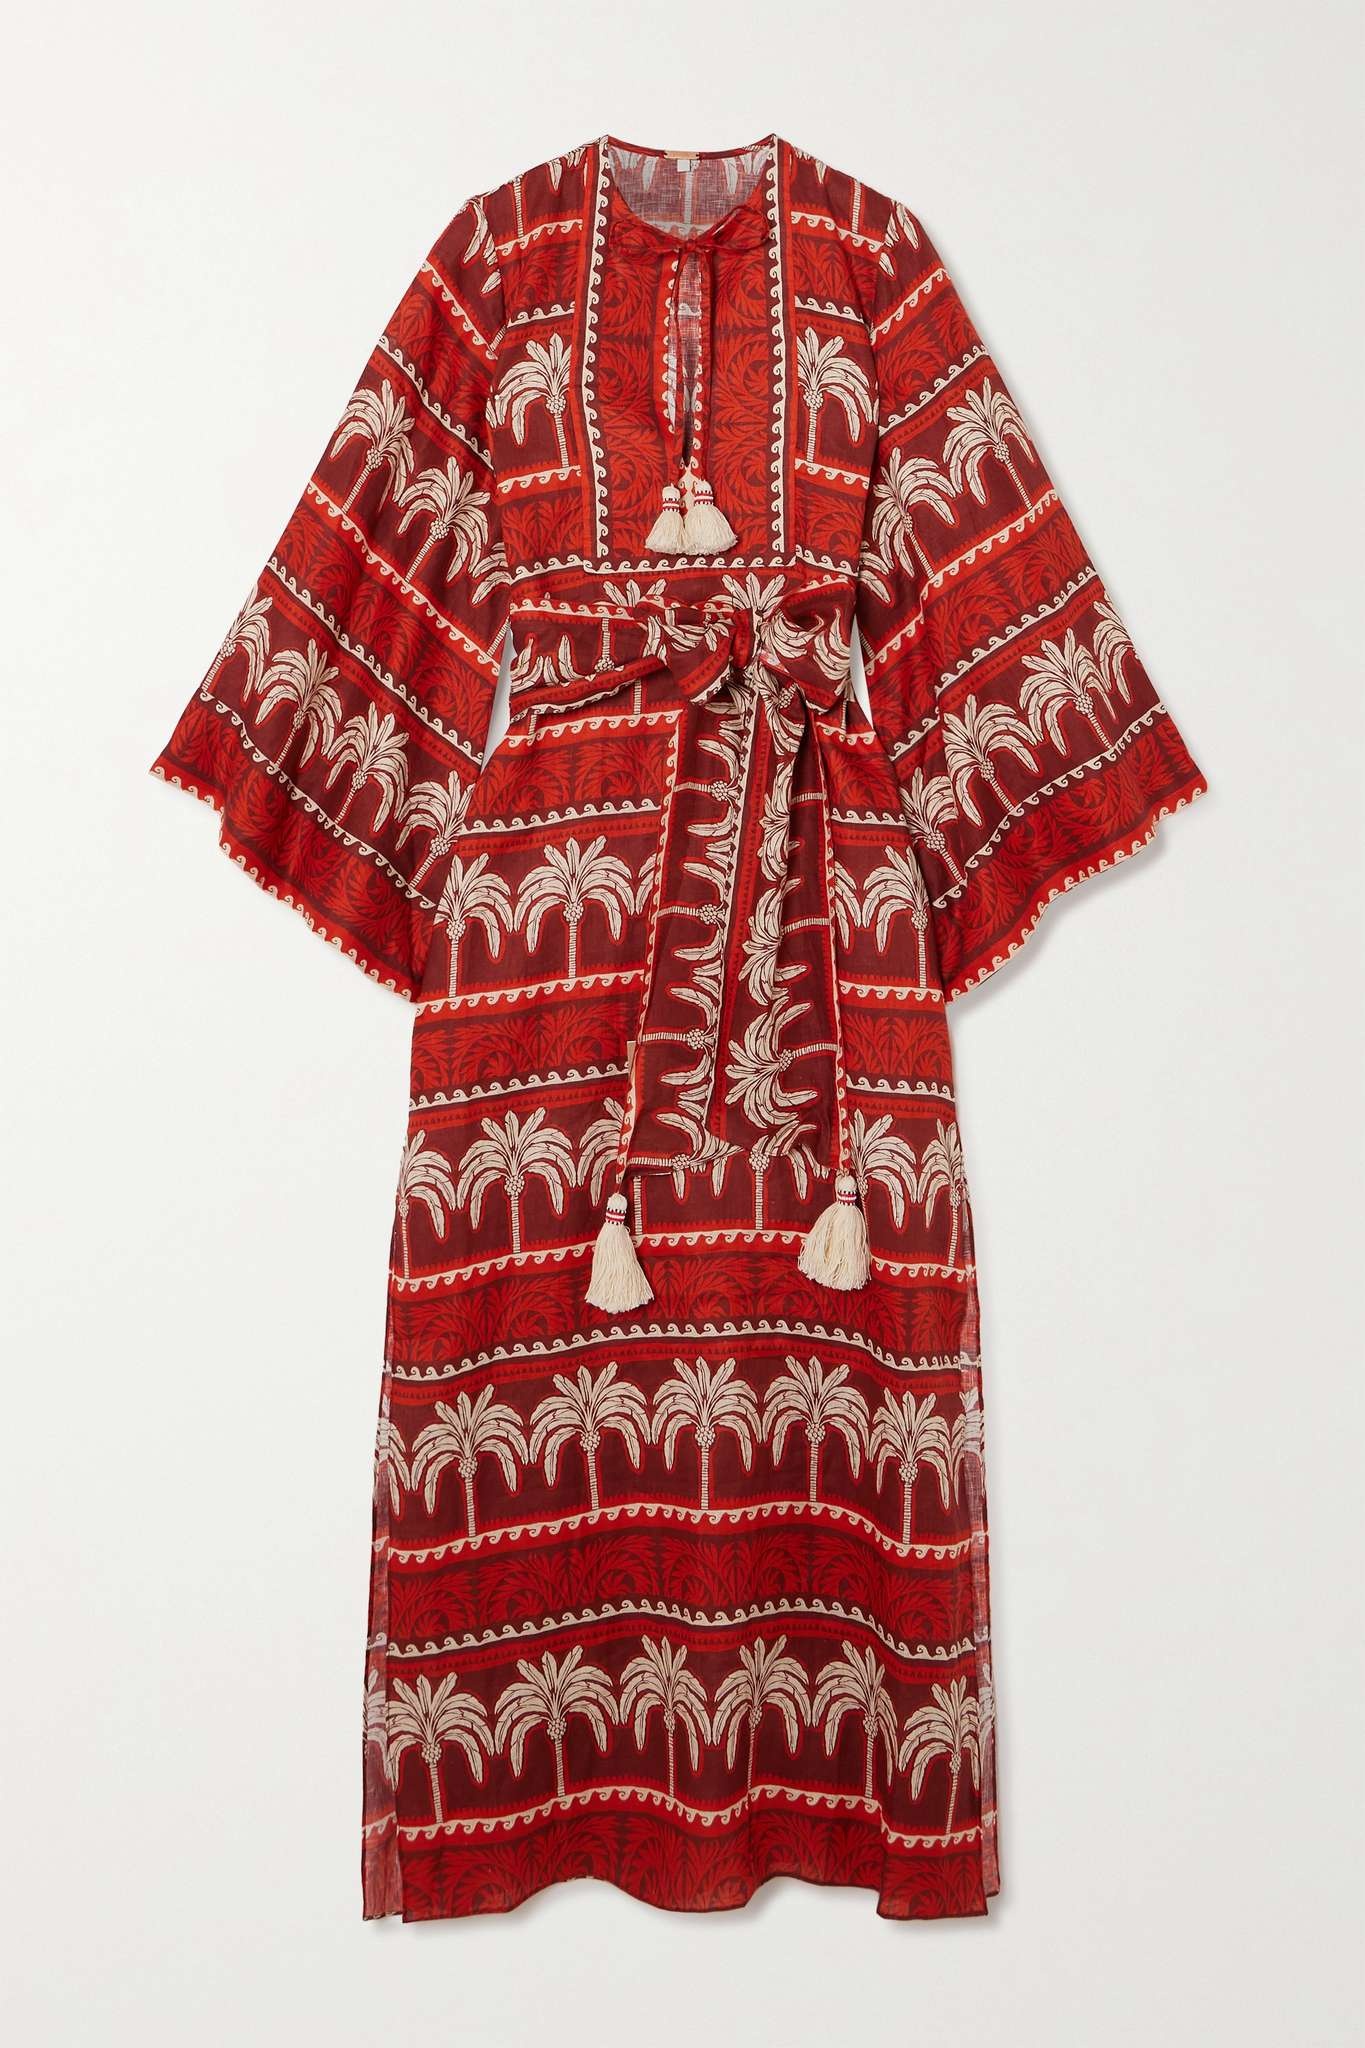 + NET SUSTAIN Wild Savannah belted tasseled printed linen dress - 1